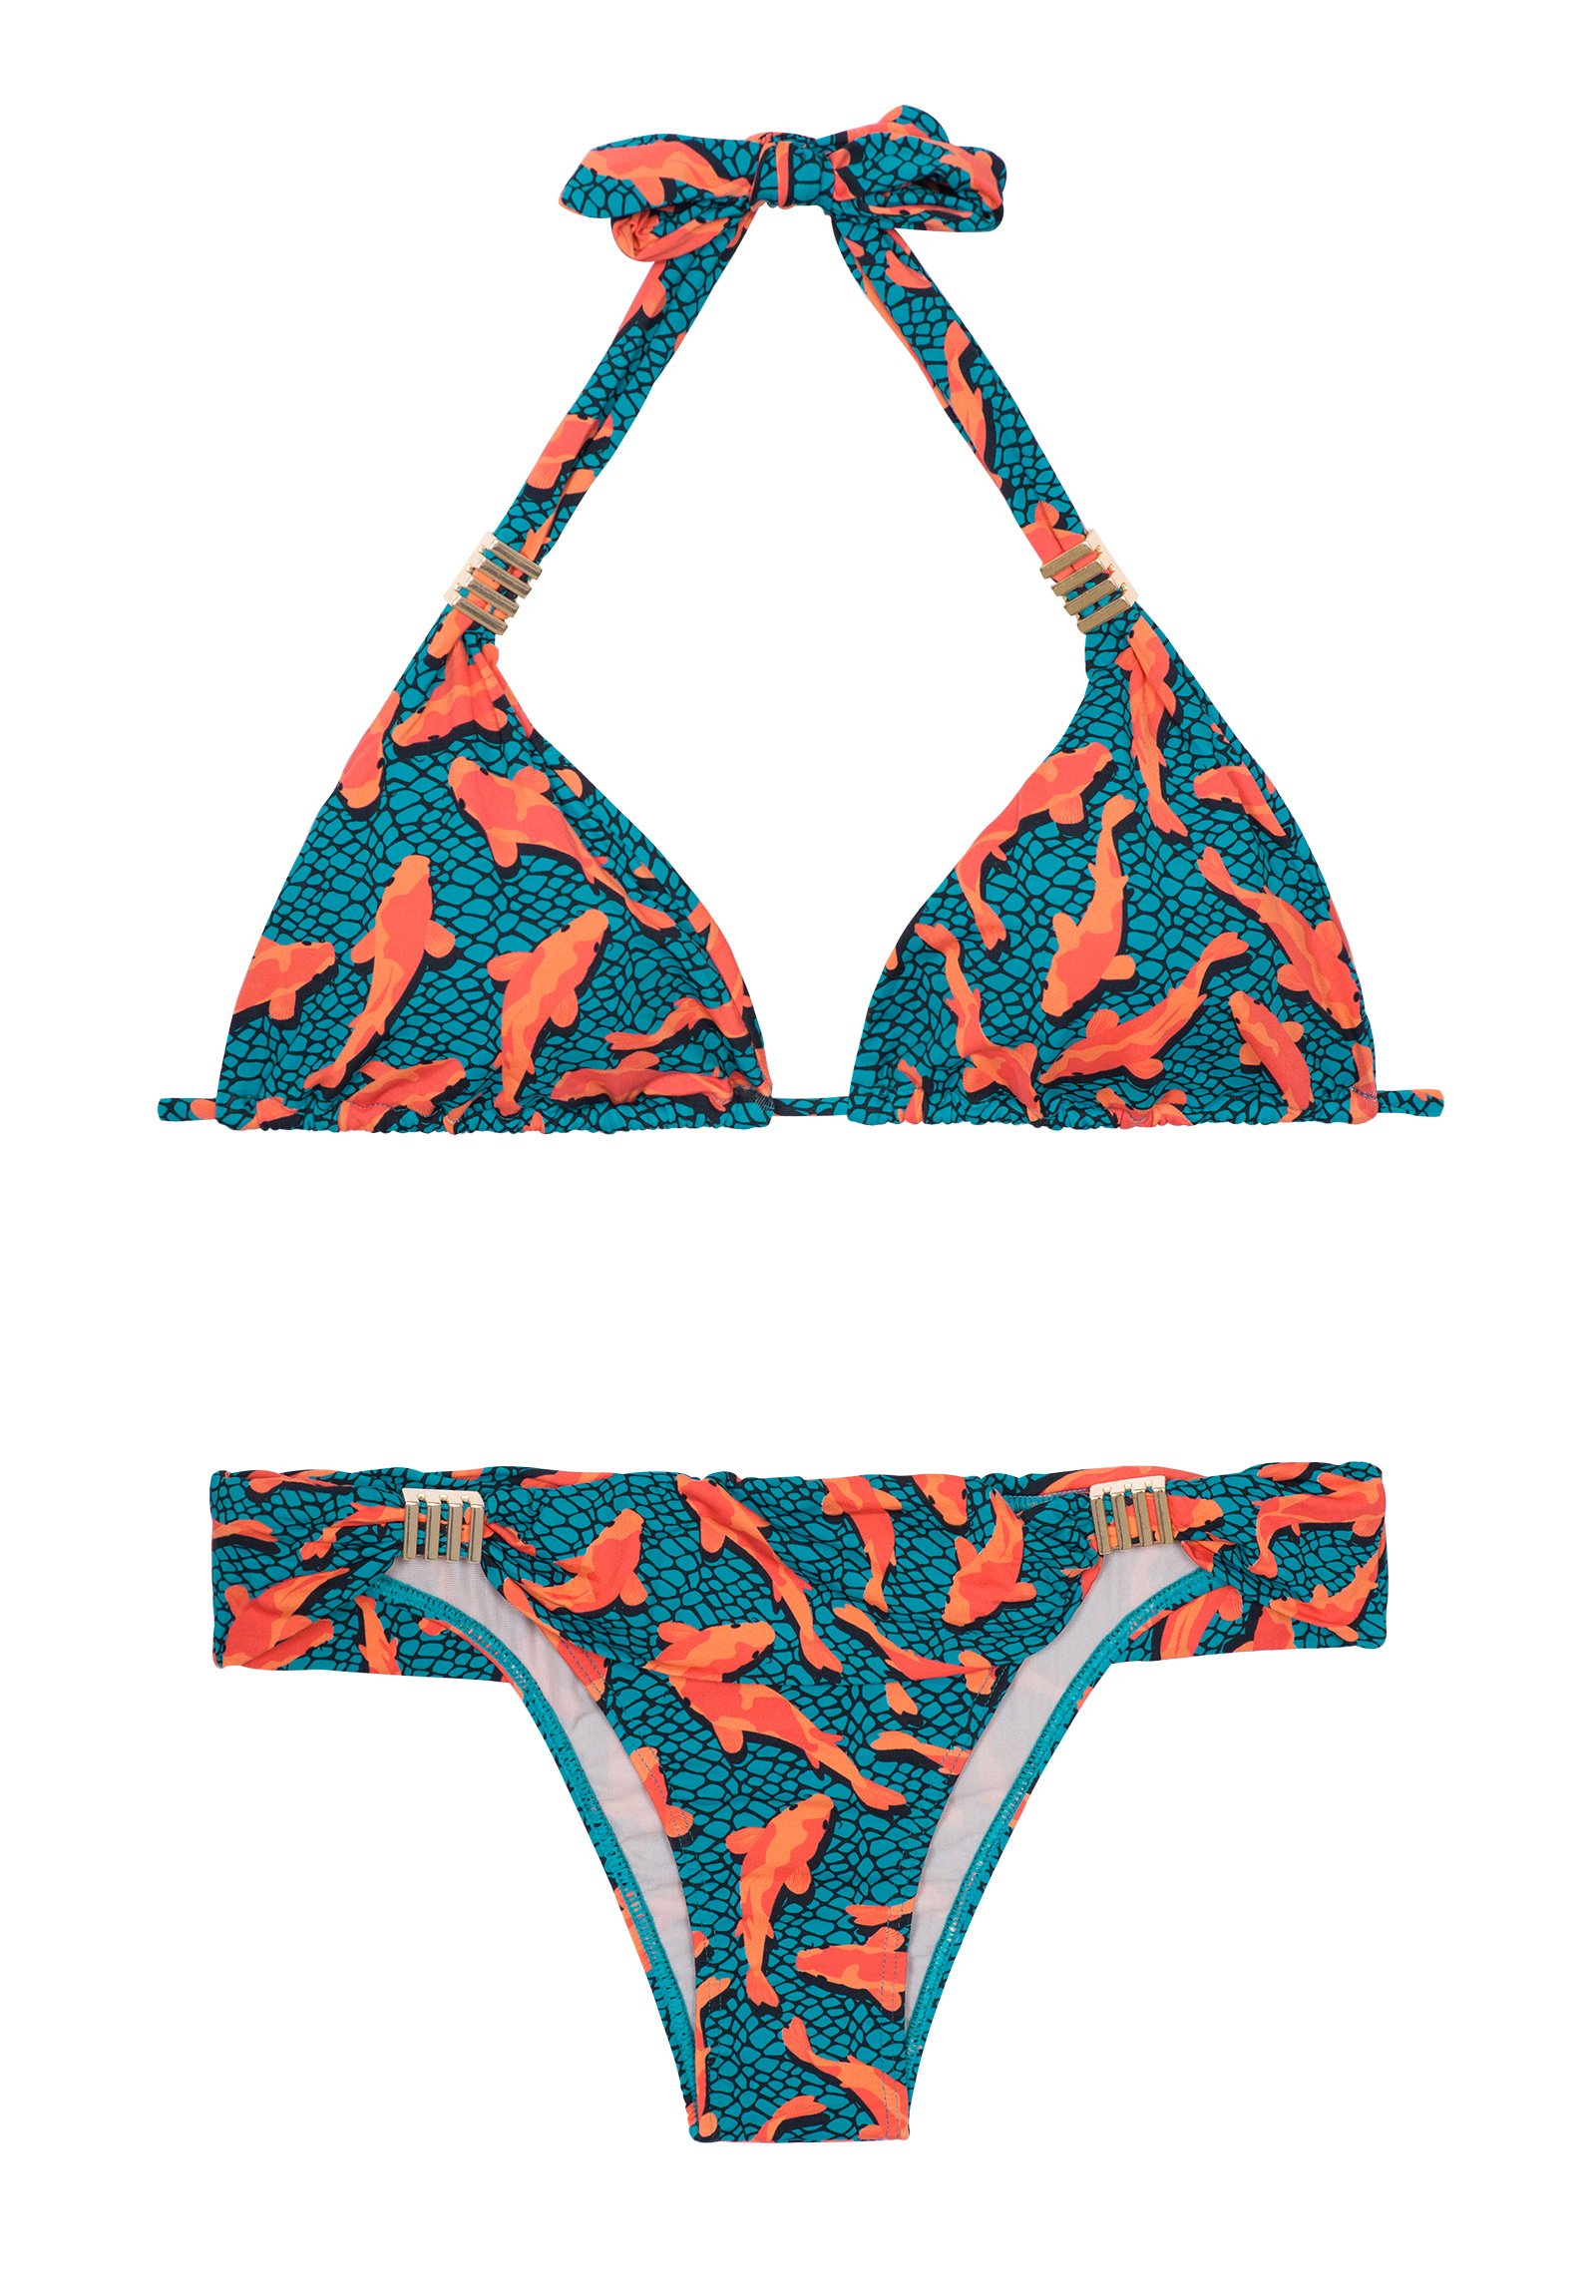 Blue And Orange Triangle Bikini, Fish Motif - Carpas Metal